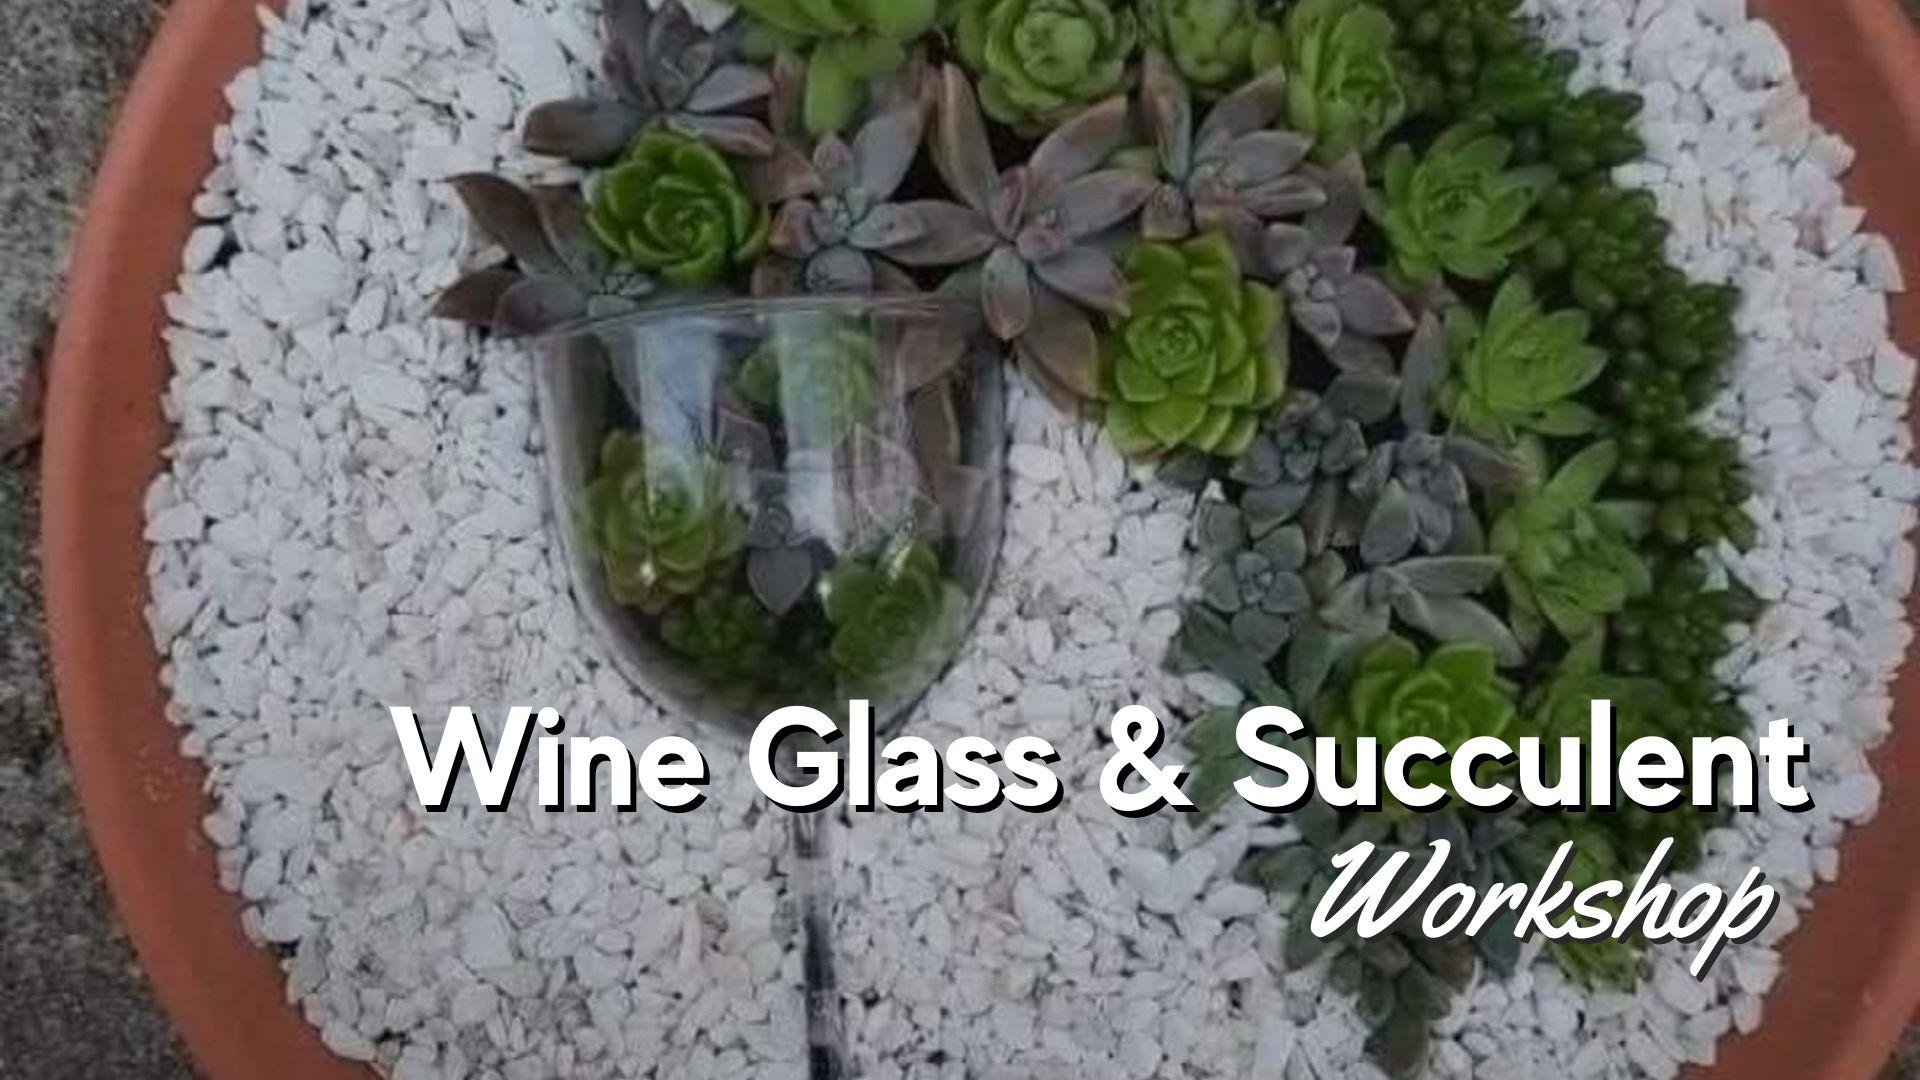 Thomas Wine Glass & Succulent Workshop